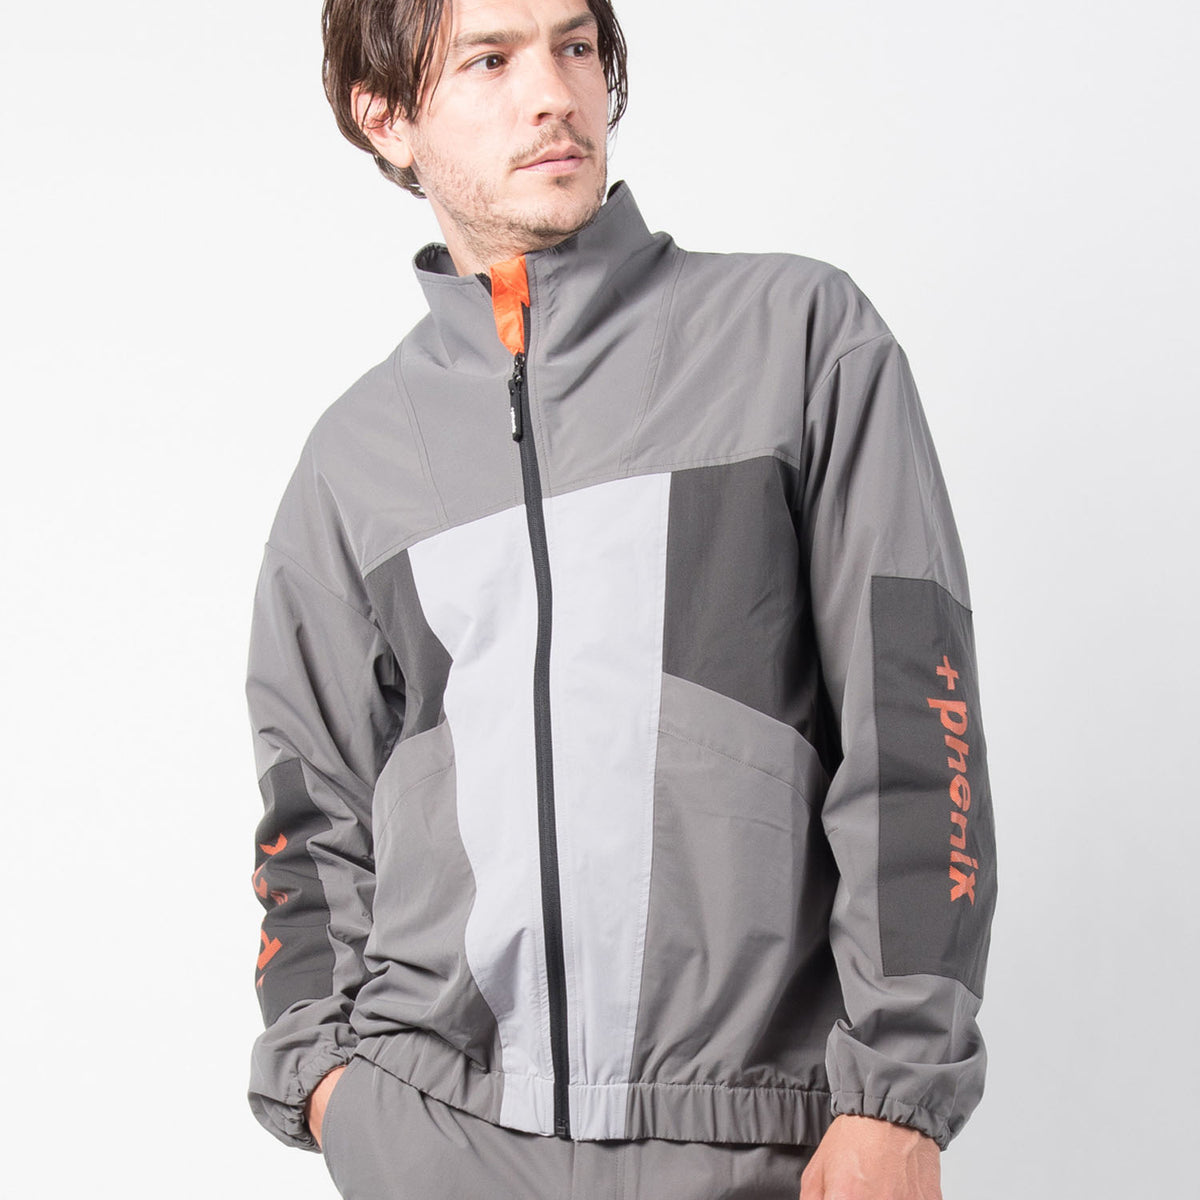 【MENS】撥水加工アウター Athletic Woven Jacket テックウェア アーバンアウトドア 高機能ウェア  +phenix(プラスフェニックス)